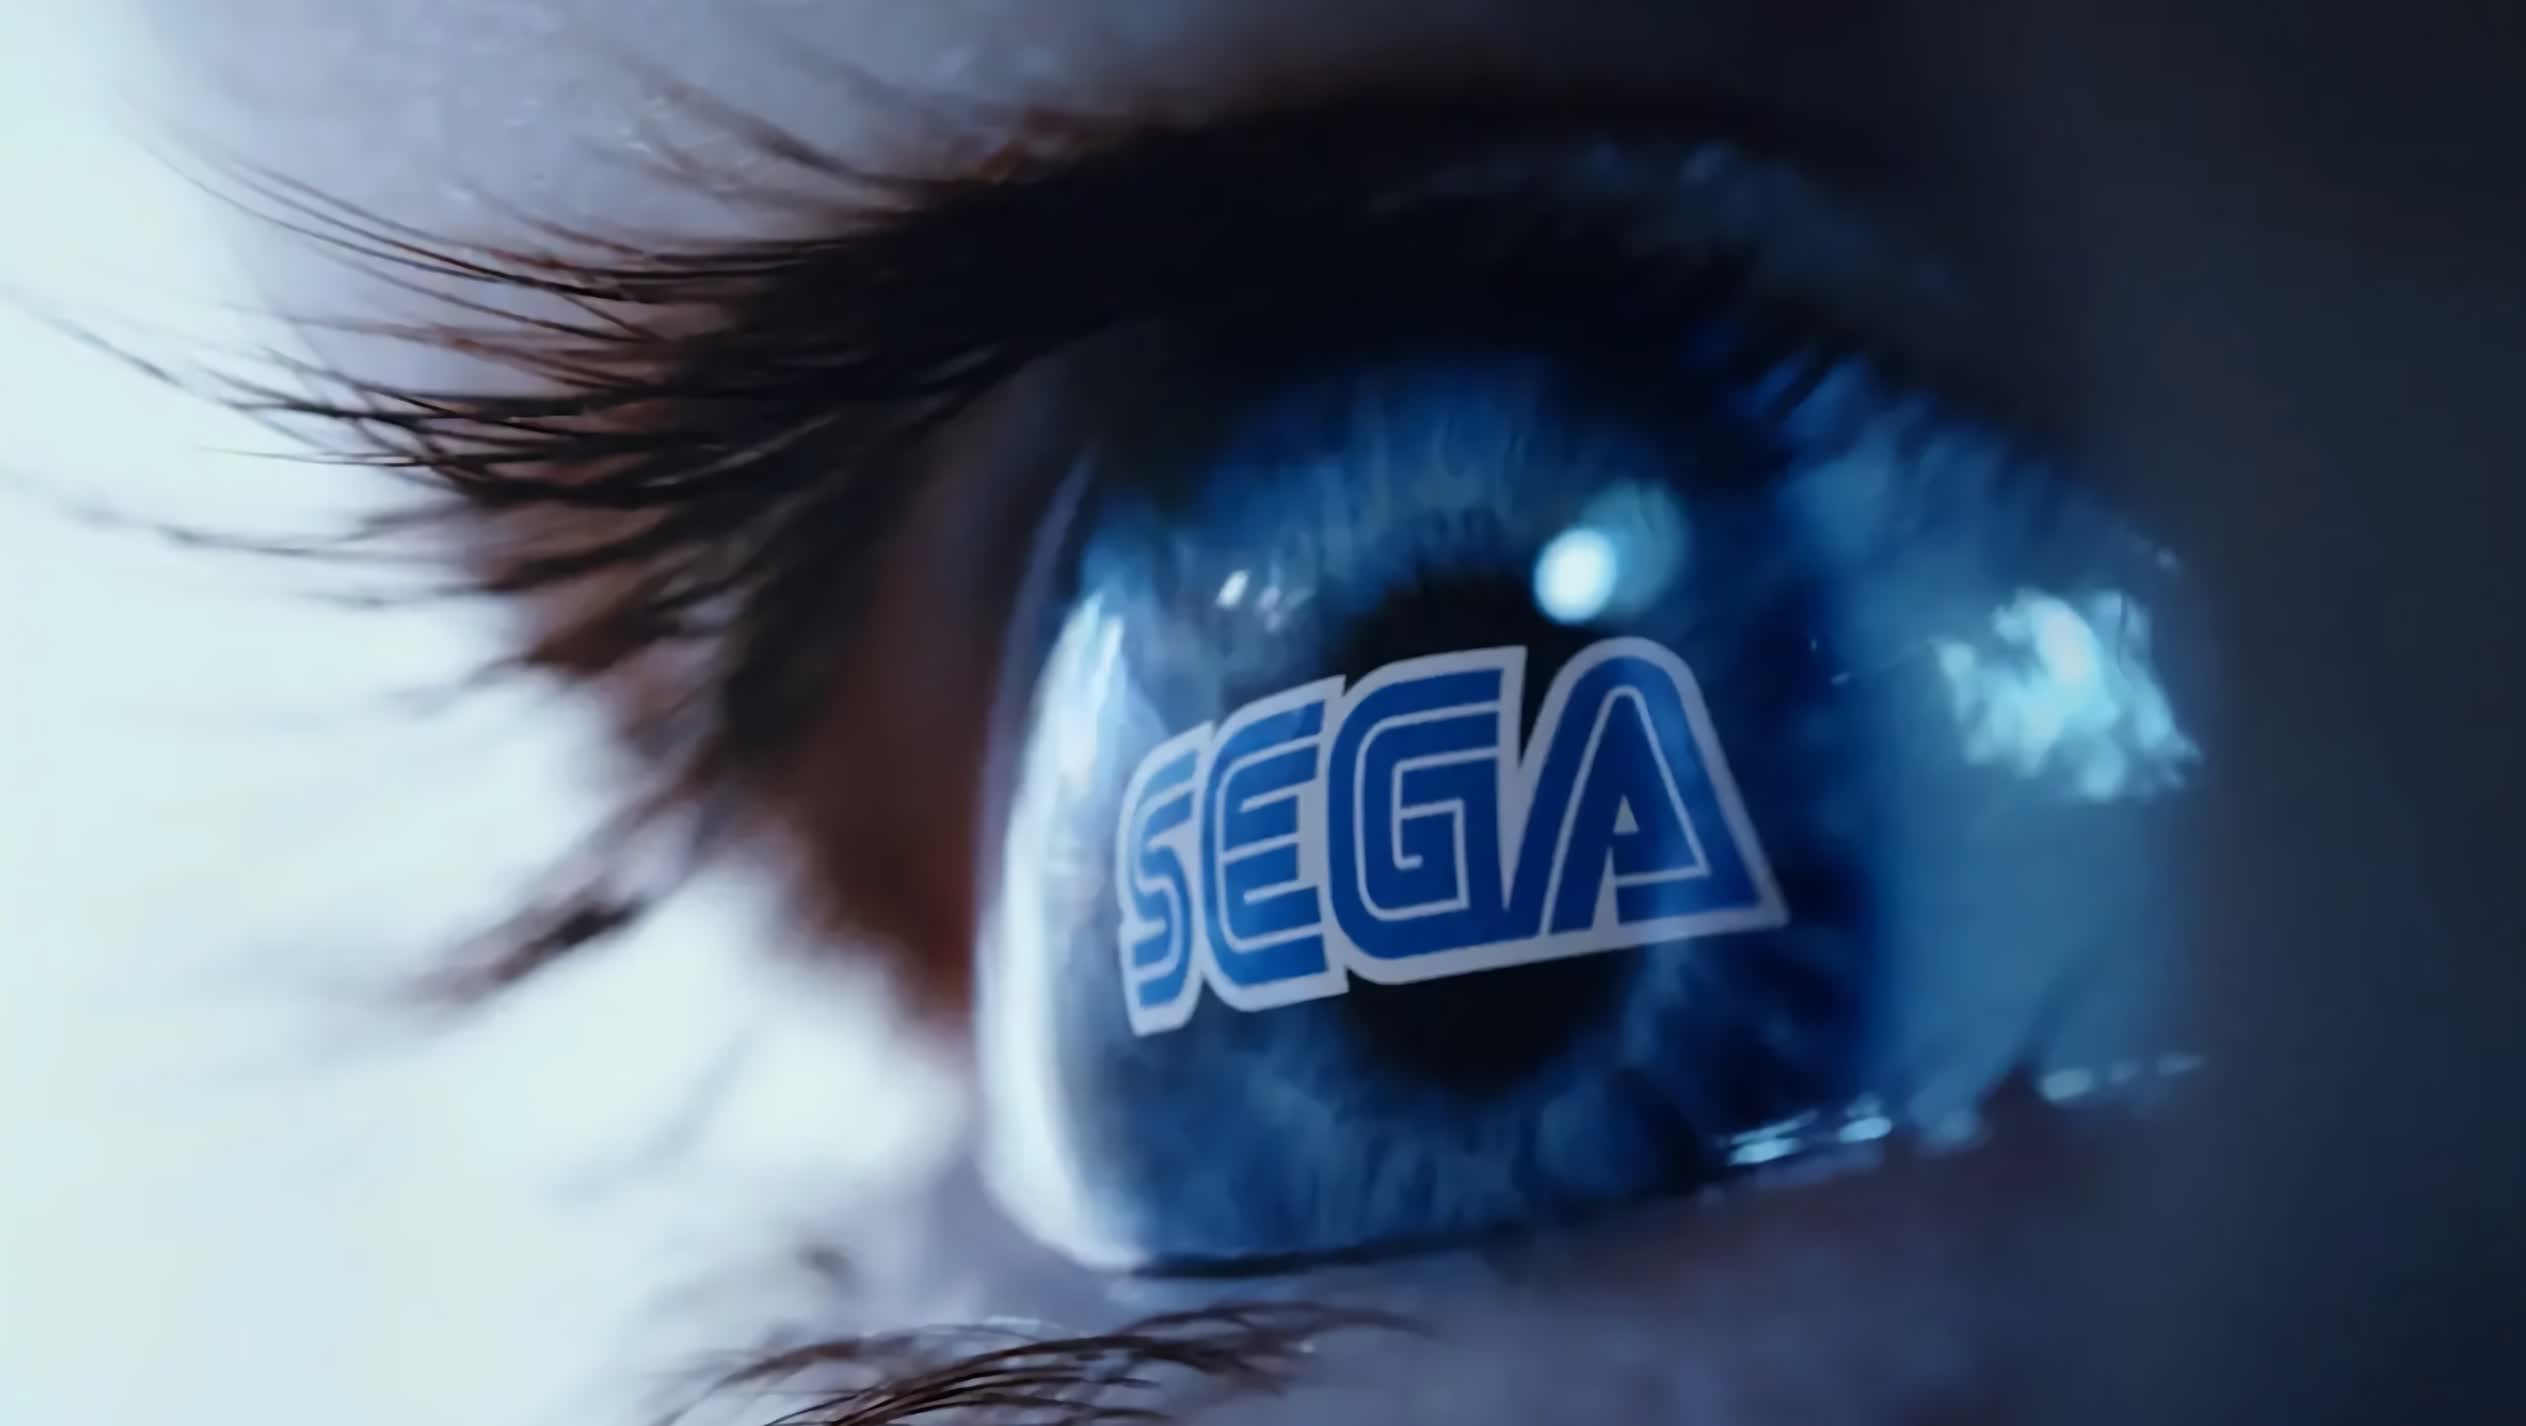 Sega might bring back classics including Crazy Taxi, Panzer Dragoon and Virtua Fighter